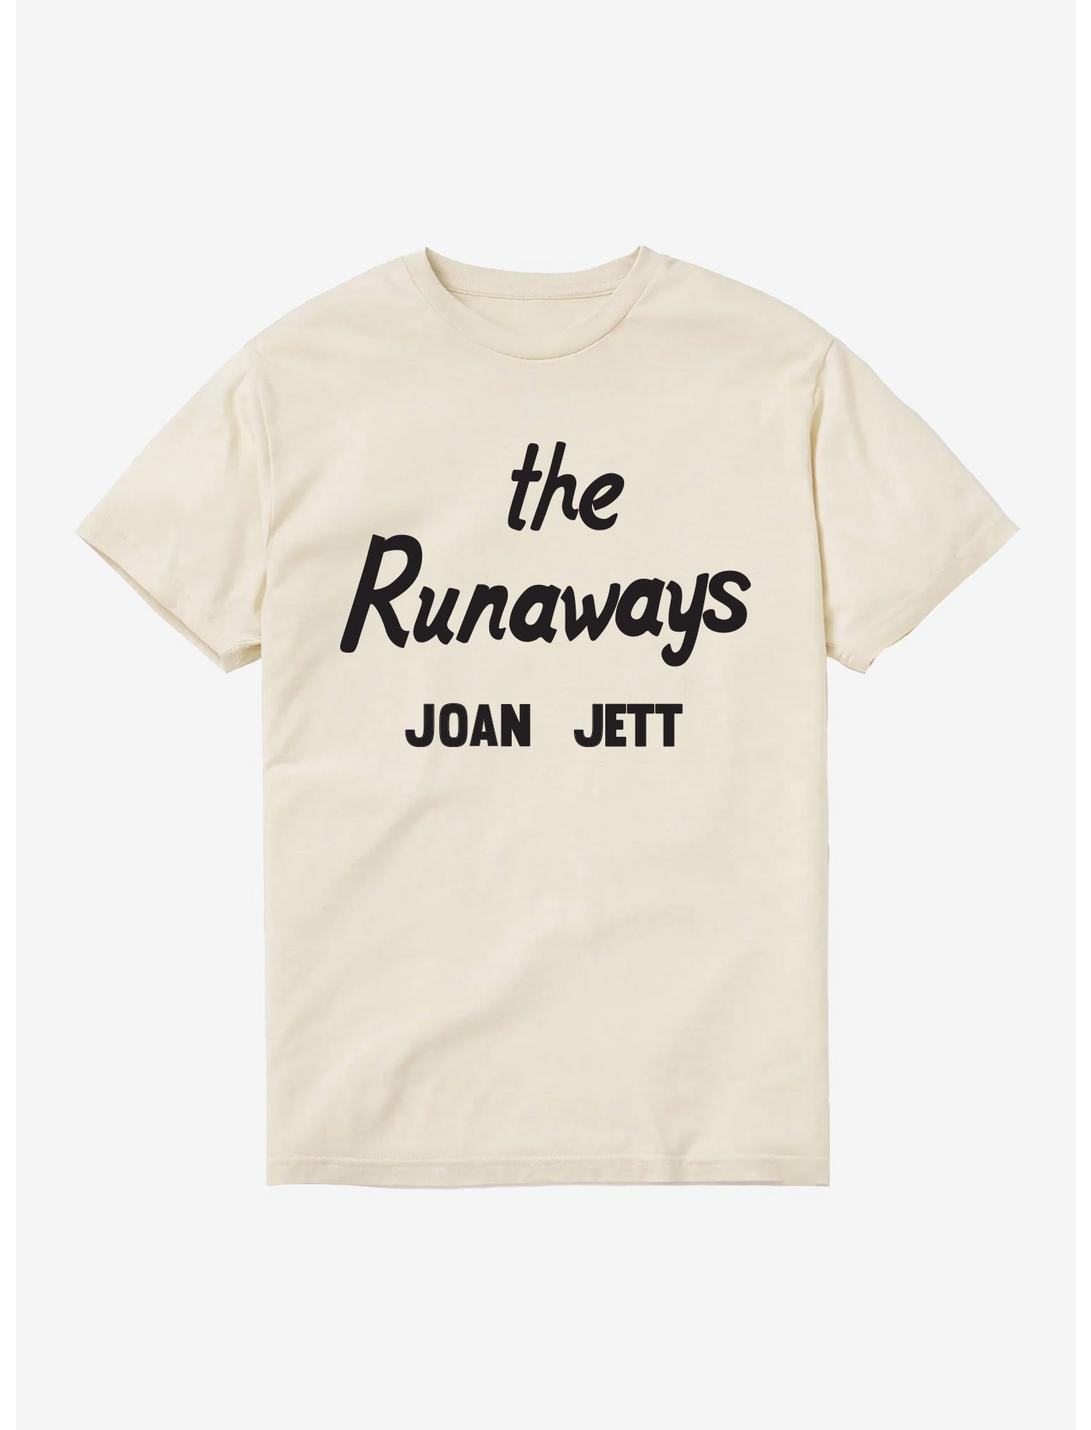 Joan Jett The Runaways Boyfriend Fit Girls T-Shirt, BRIGHT WHITE, hi-res